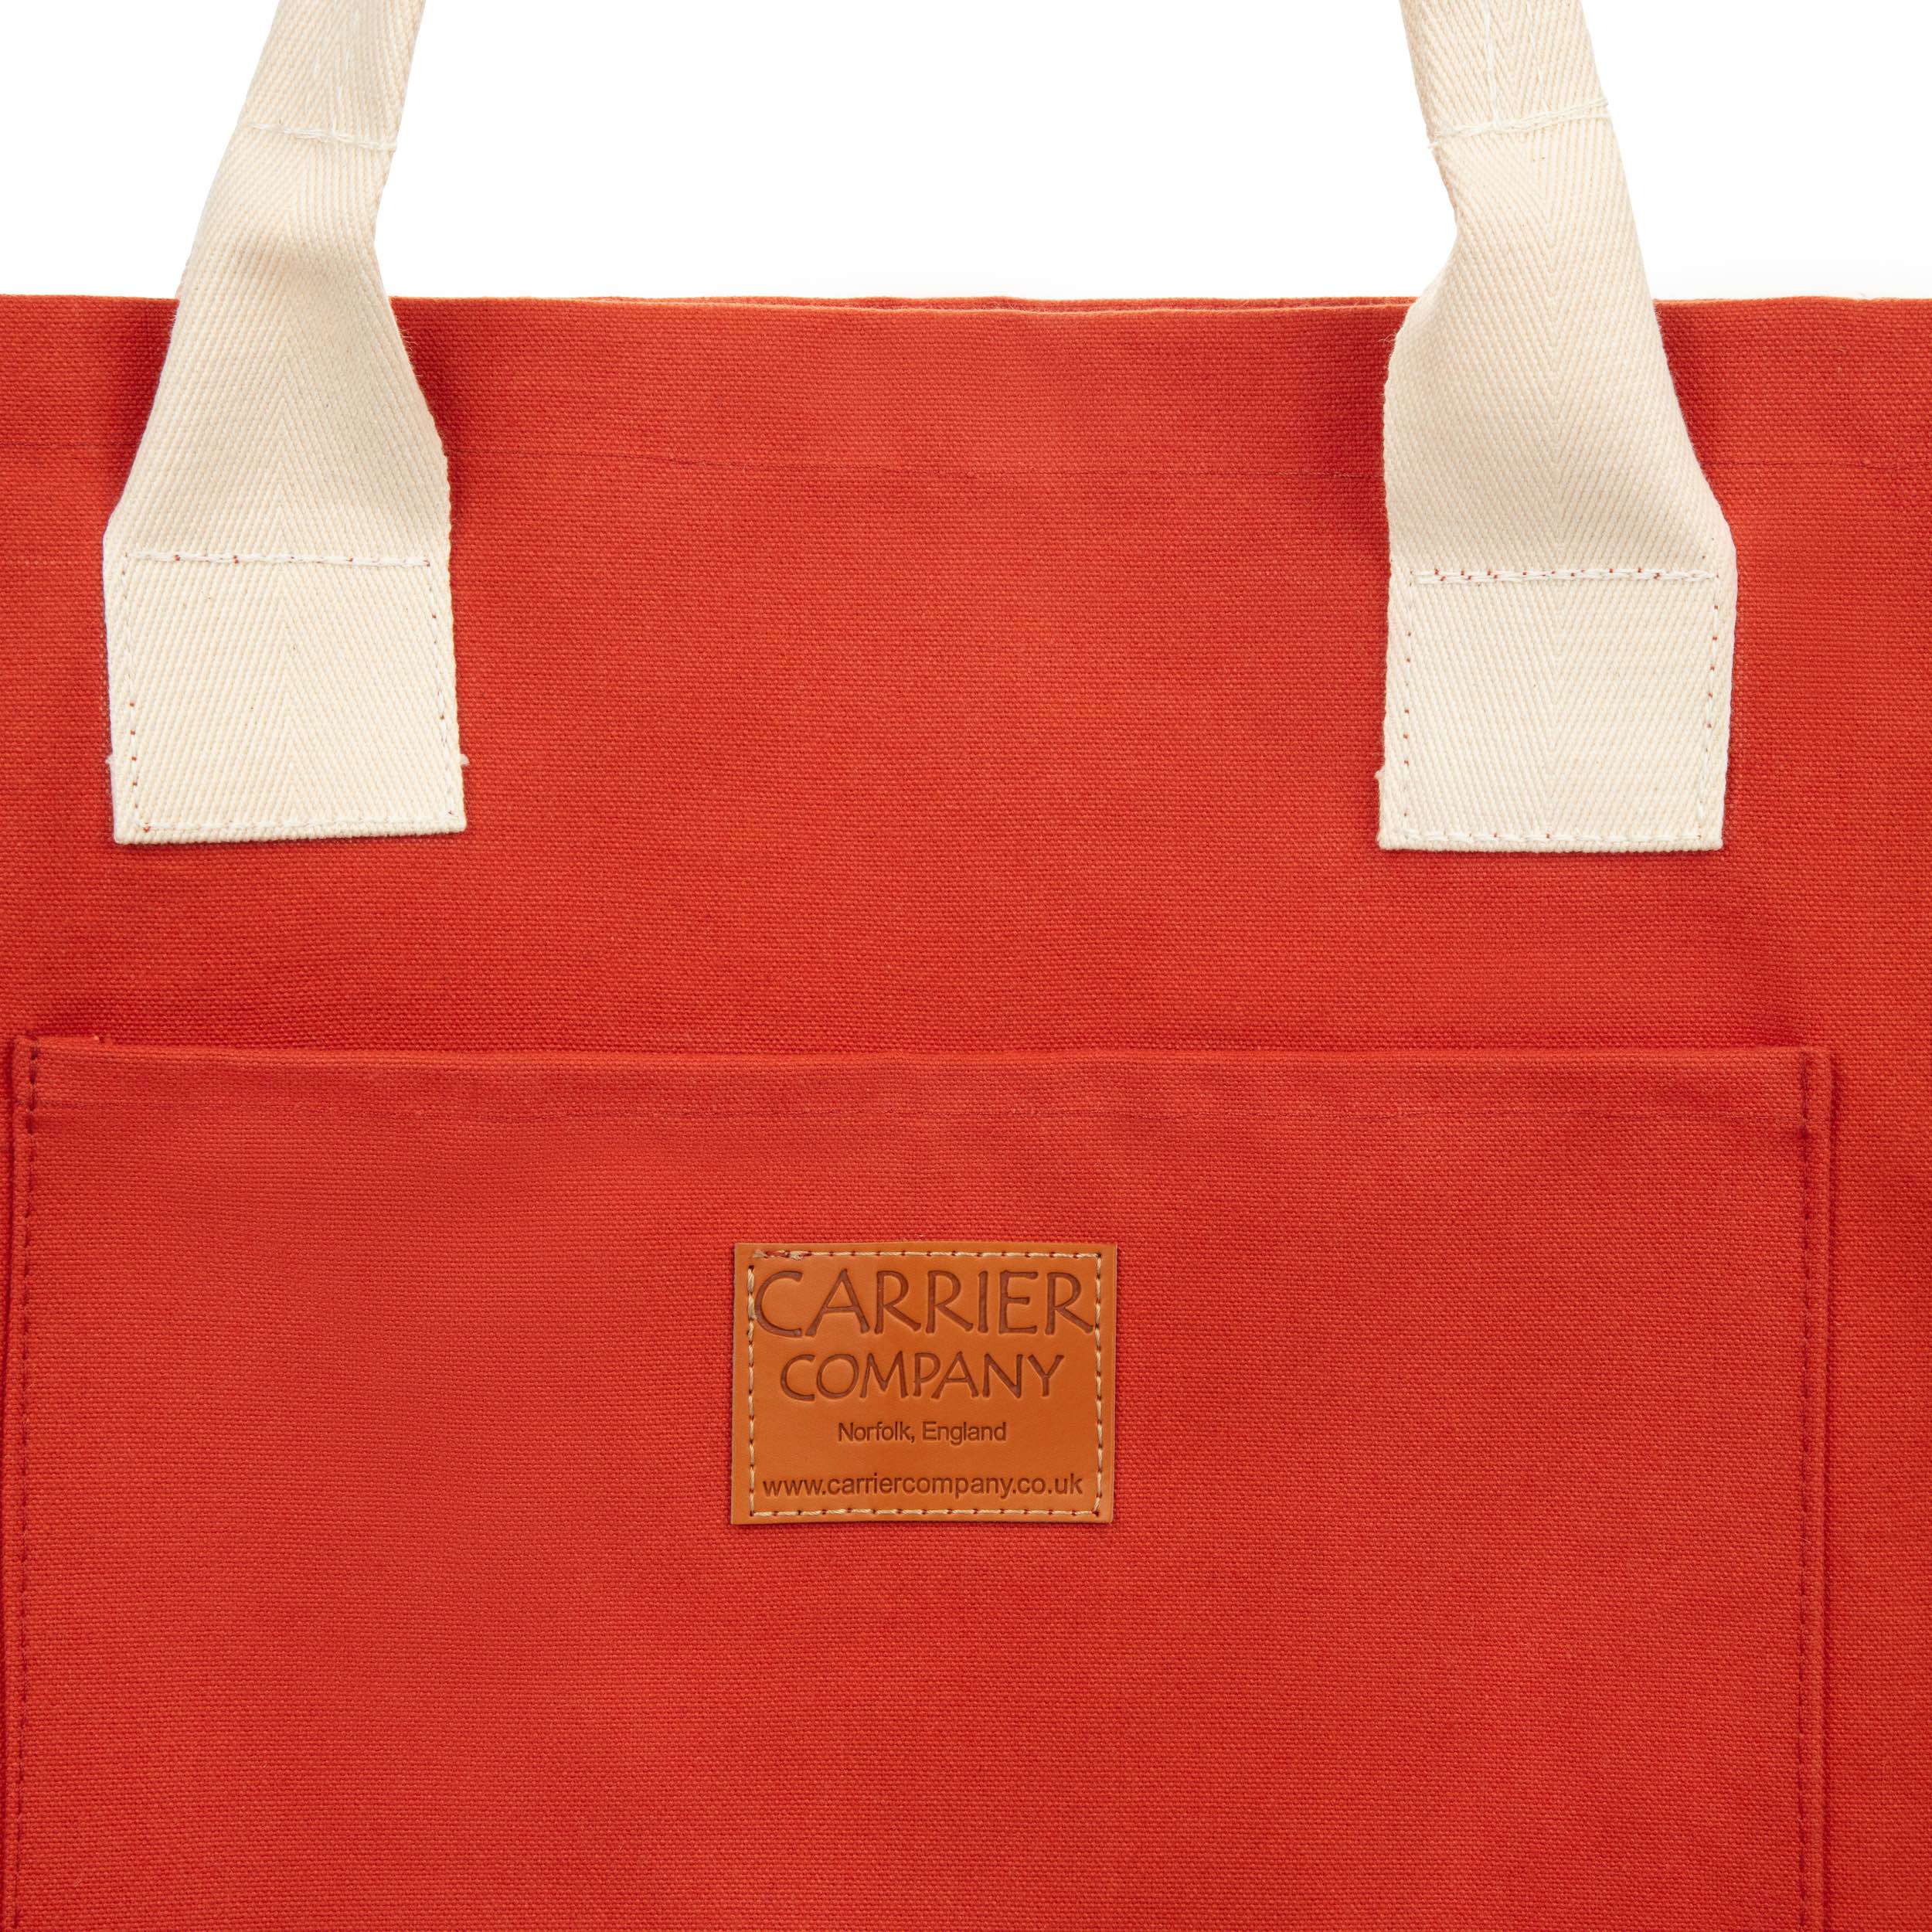 Carrier Company White Handled Beach Bag in Orange